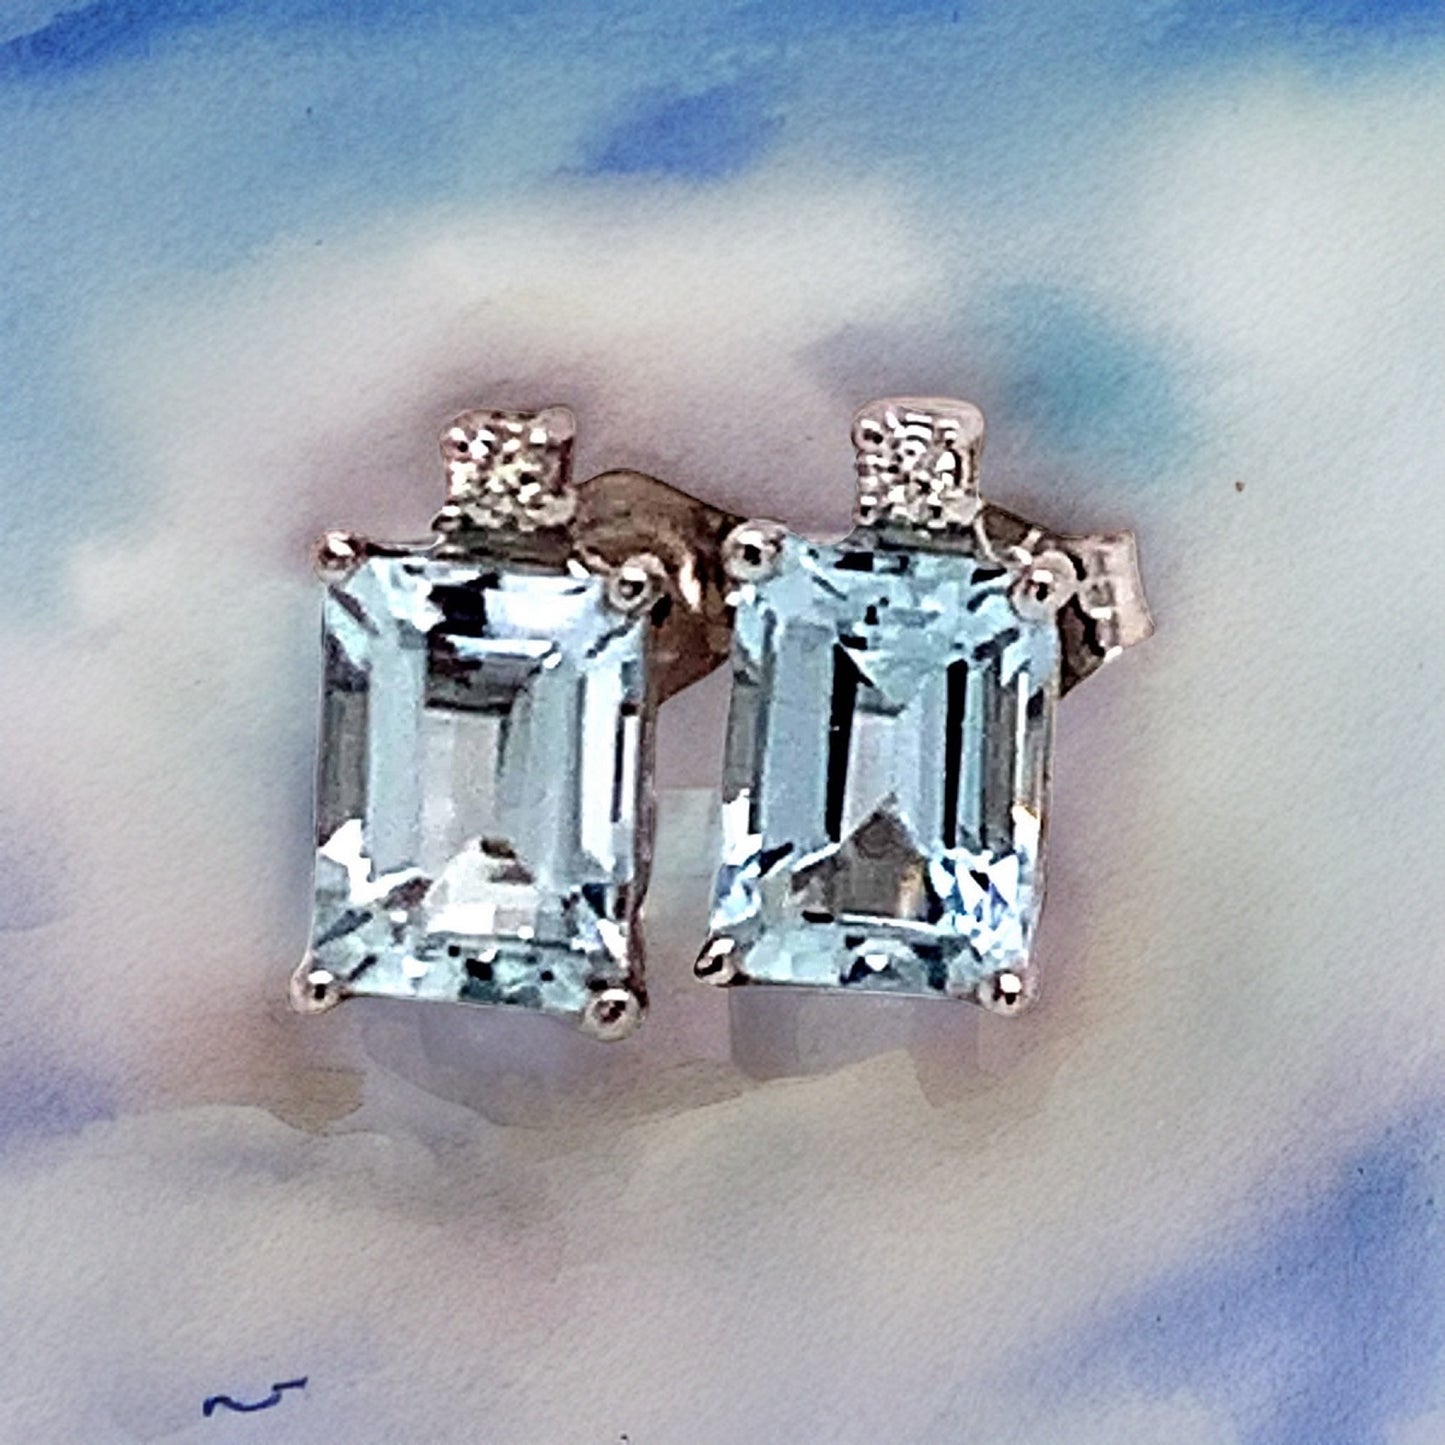 Natural Aquamarine Diamond Earrings 14k WG 1.84 TCW Certified $1,490 018716